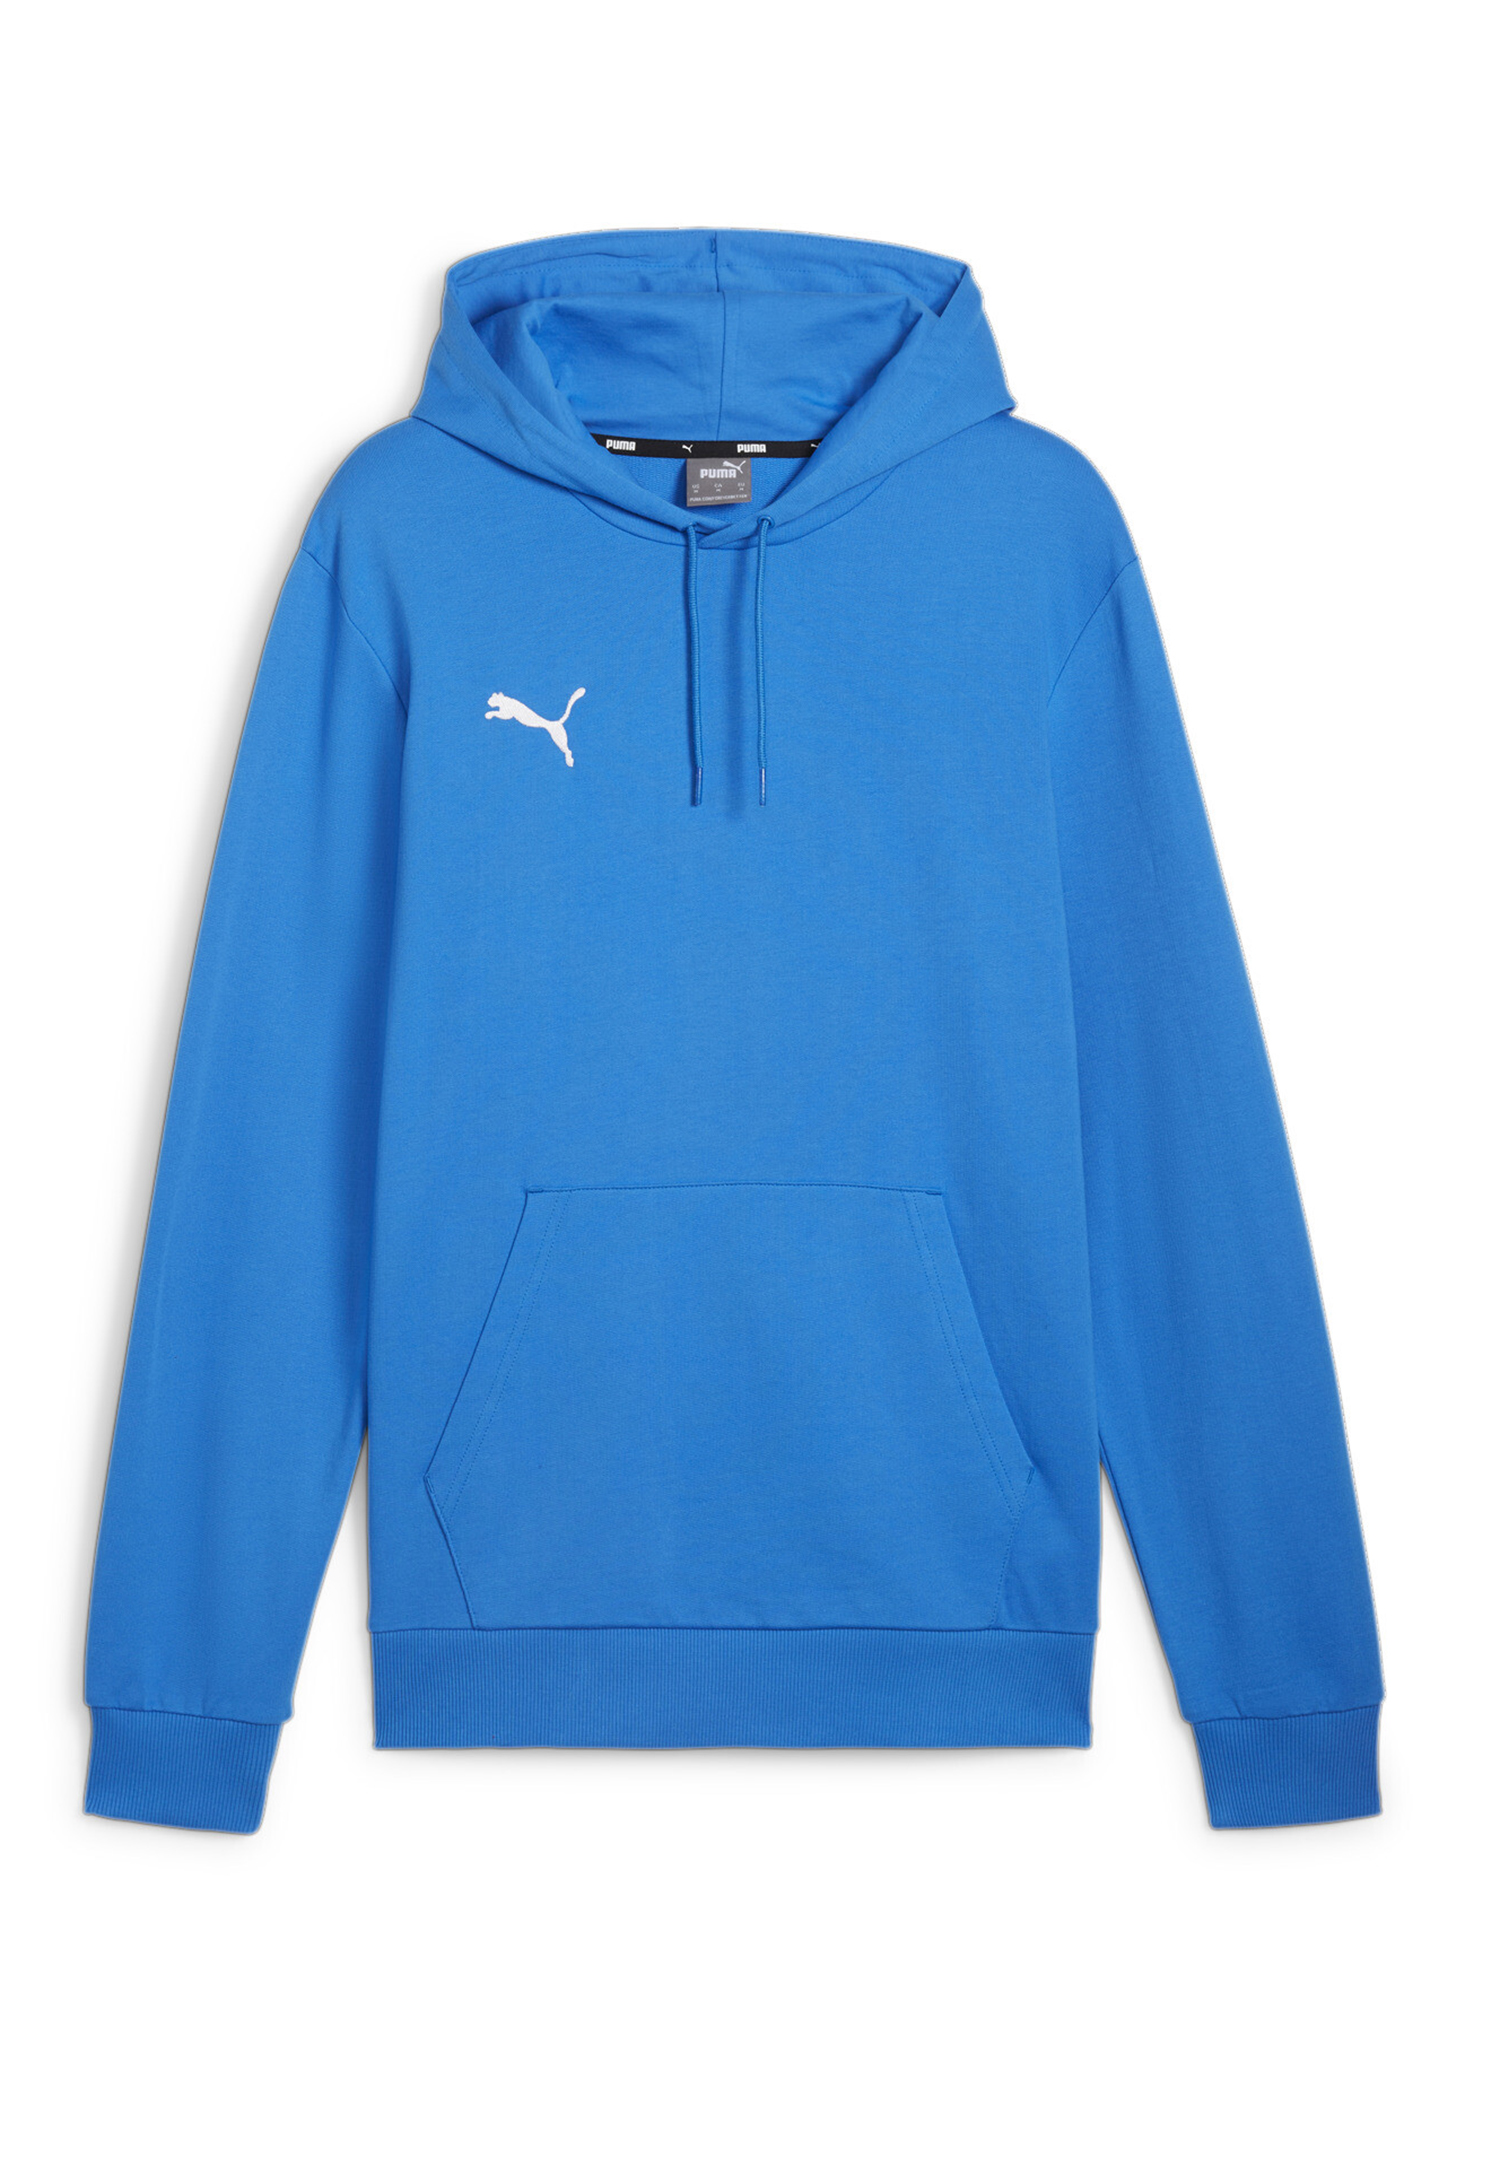 PUMA Herren teamGOAL Casuals Hoody Sweatshirt Pullover 658618 Blau